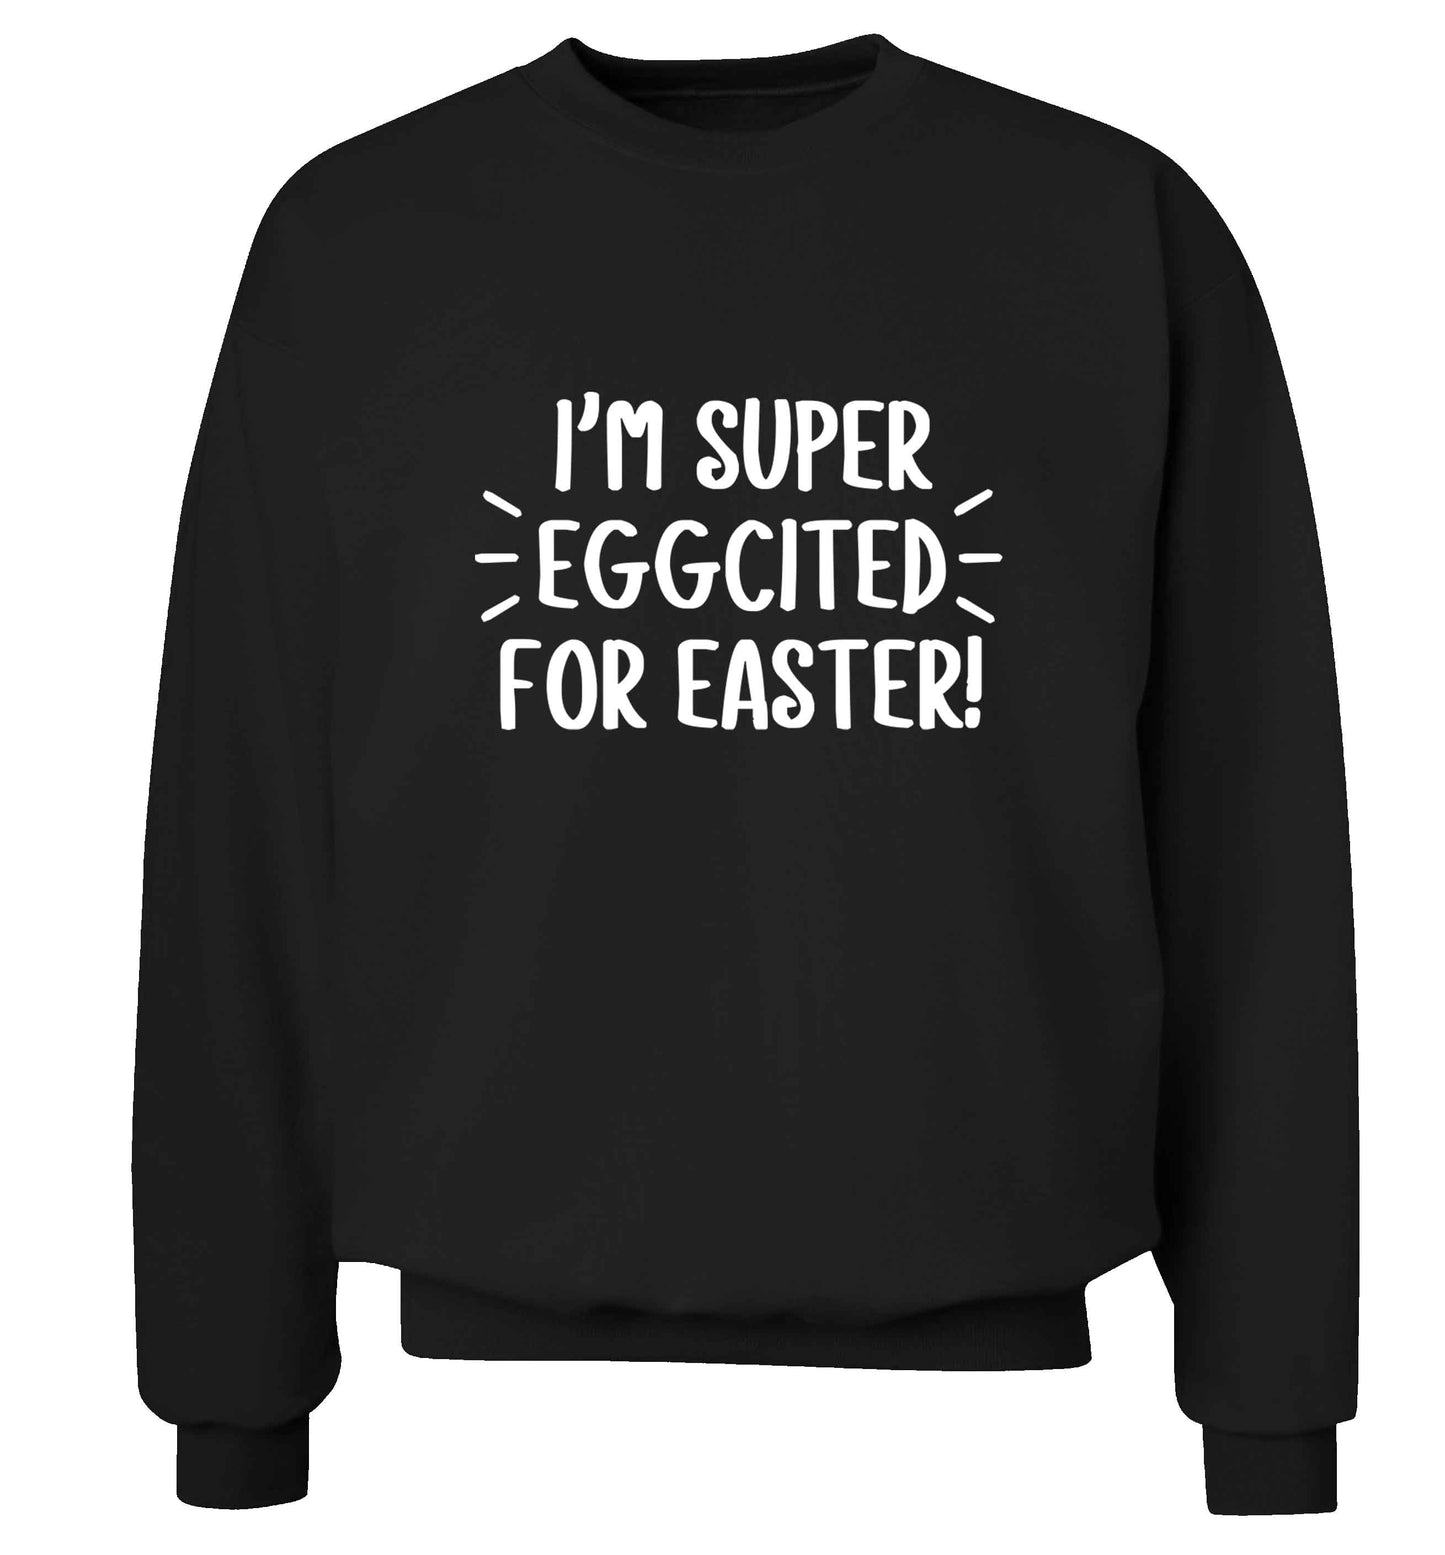 I'm super eggcited for Easter adult's unisex black sweater 2XL